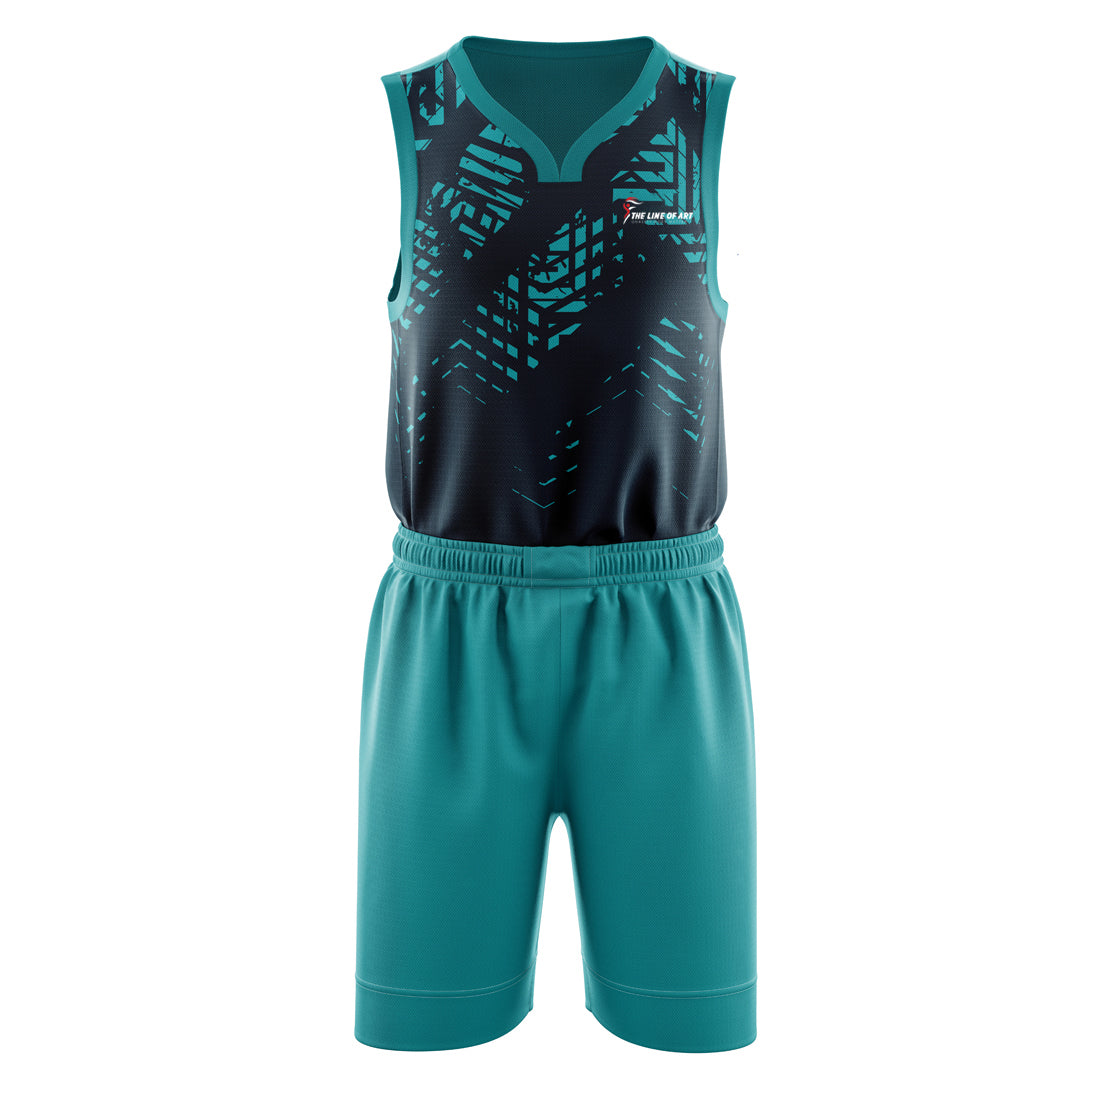 Premium Basketball Uniform - Elevate Your Game | Customised Sportswear Uniform